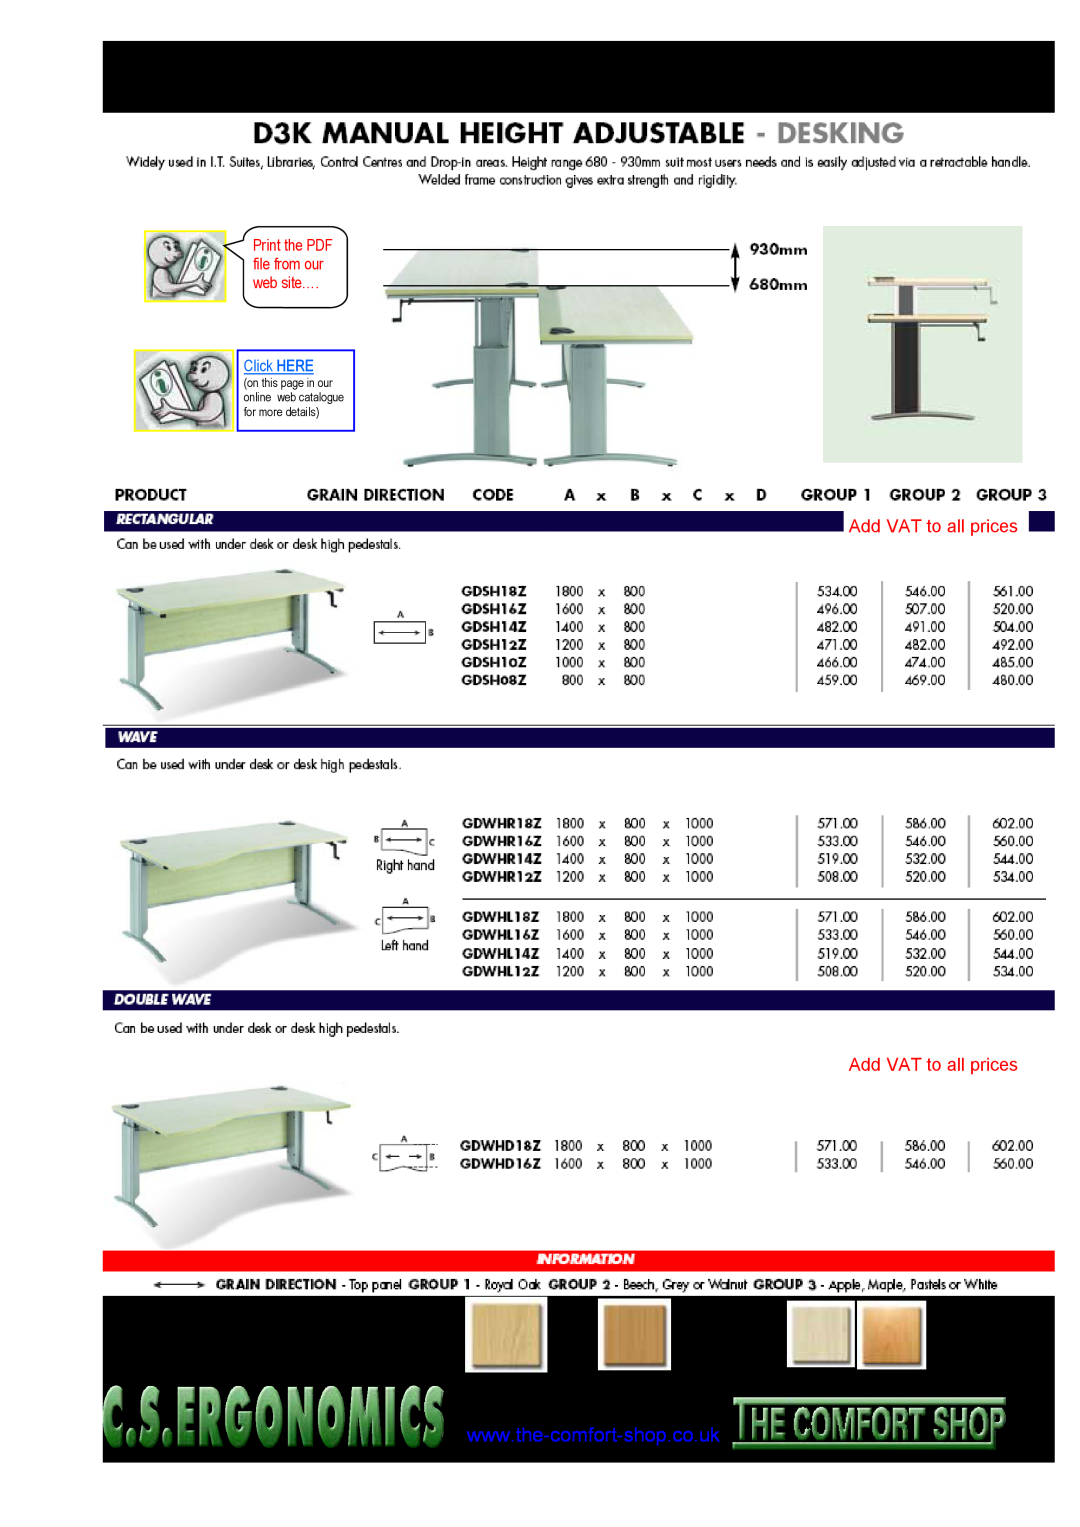 Fellowes RH 300 Desks crank height-adjustable, Add VAT to all prices Add VAT to all prices, 17, Alexandria Drive, 01253 